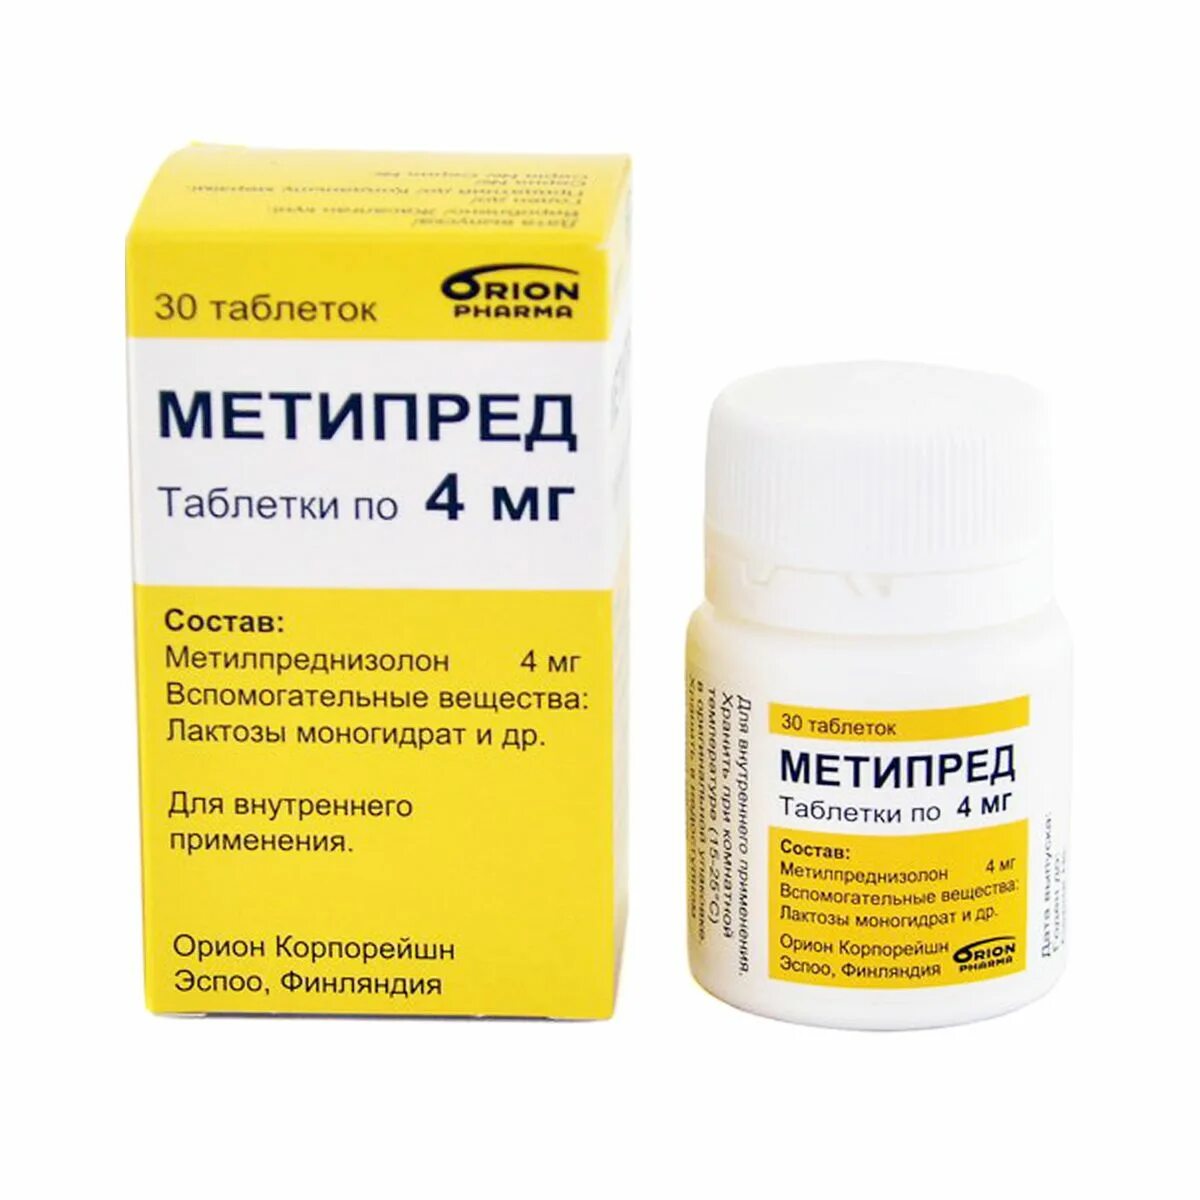 Метипред таблетки 4 мг. Метипред лиофилизат 250 мг. Метипред таблетки 4 мг, 30 шт. Орион Корпорейшн. Метипред 16 мг таблетки. Метипред купить в рязани